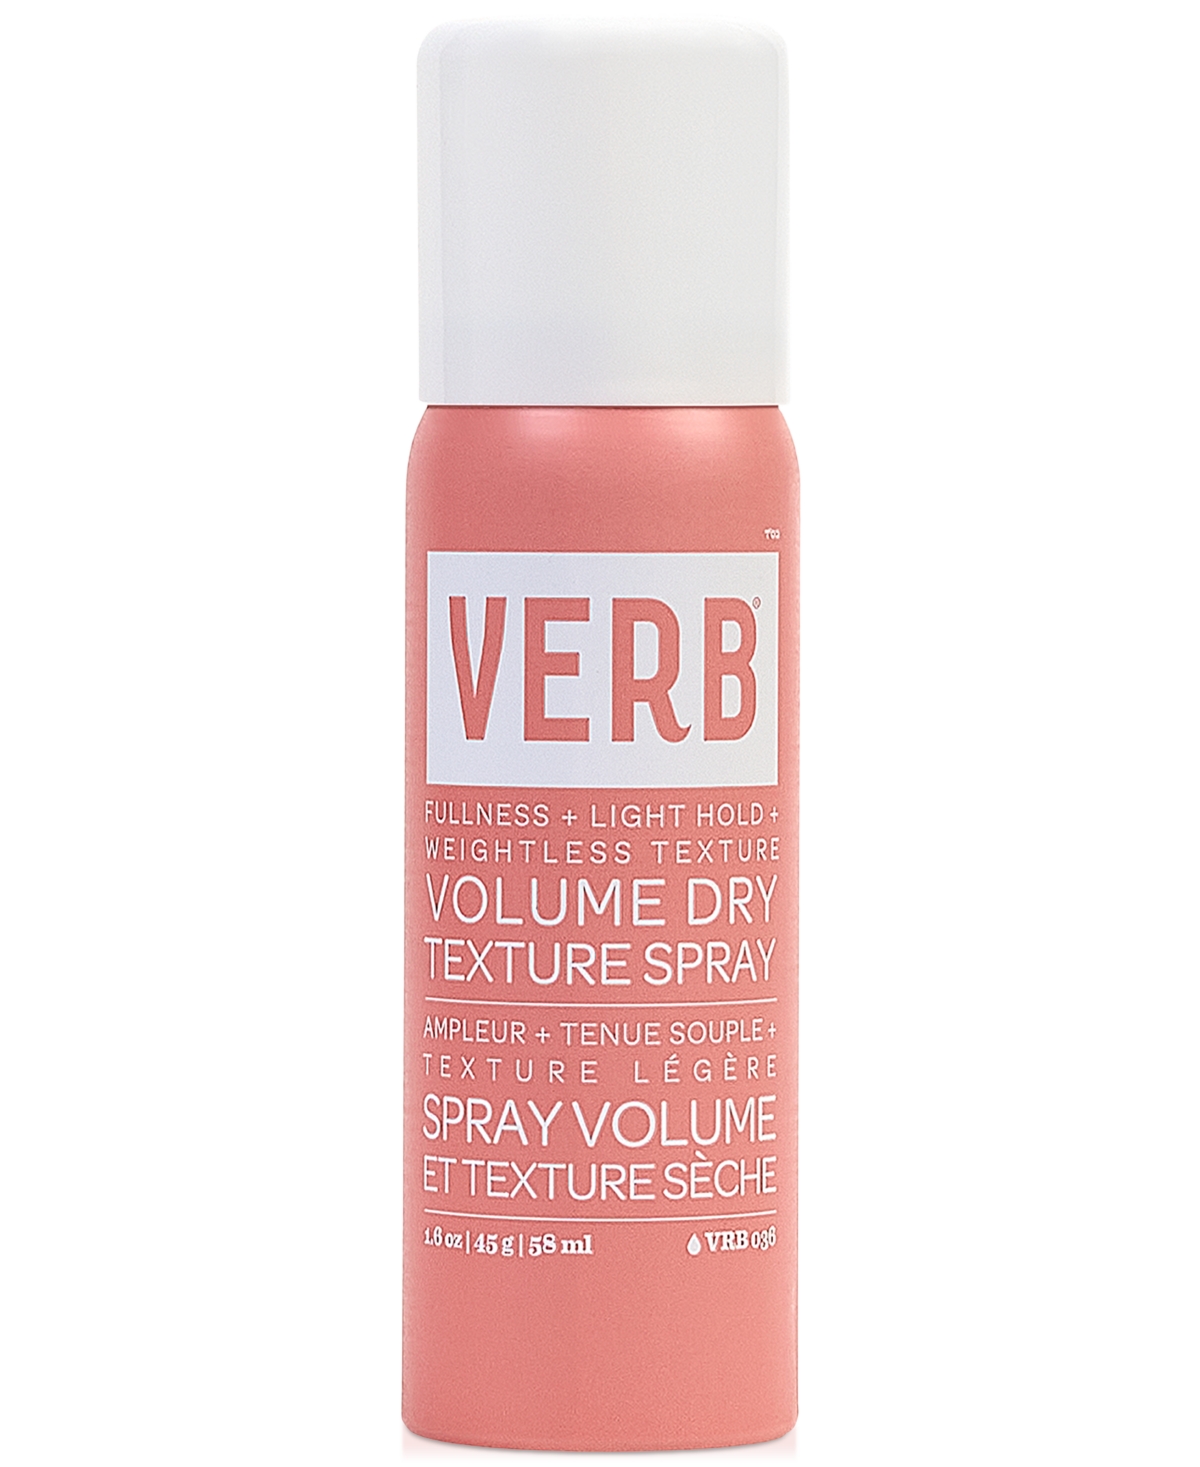 Volume Dry Texture Spray, 1.6 oz.